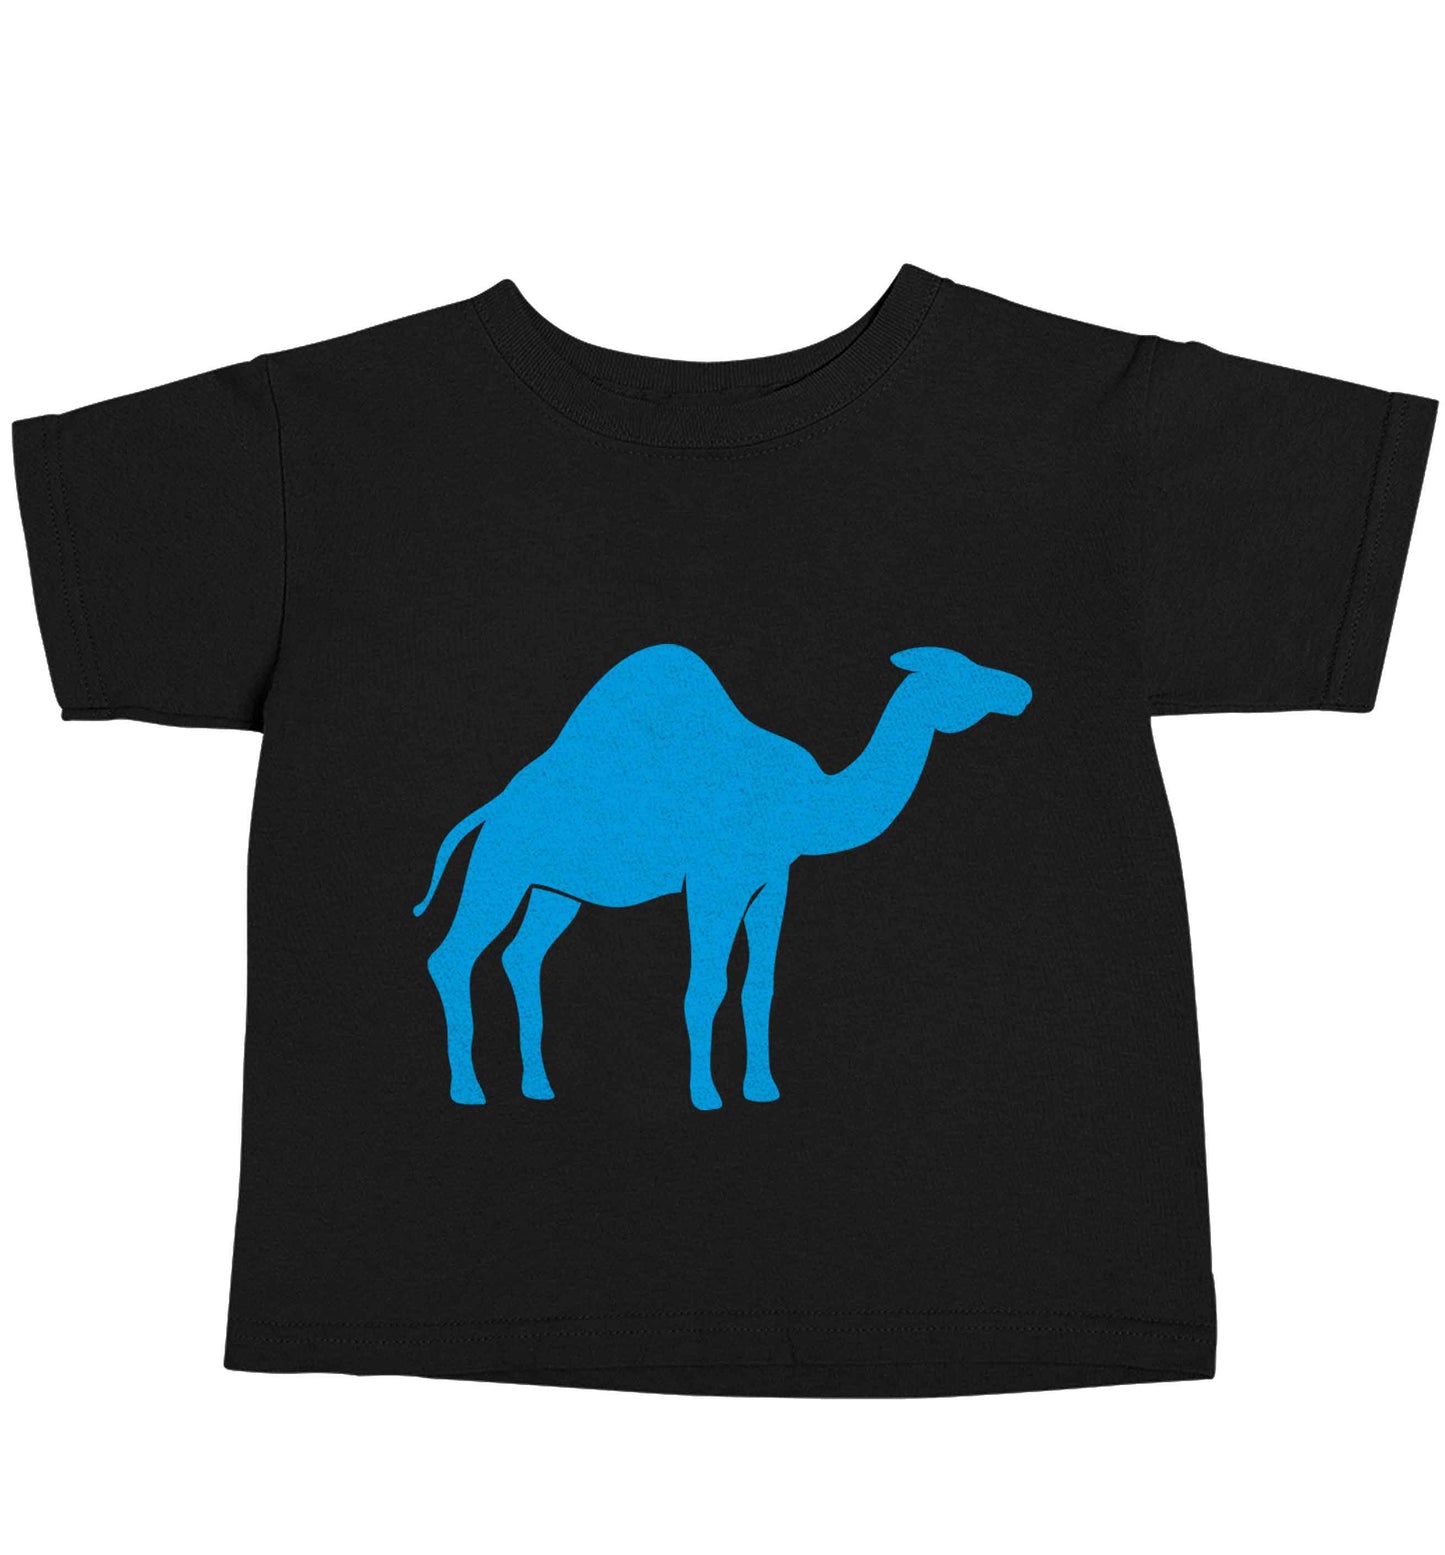 Blue camel Black baby toddler Tshirt 2 years